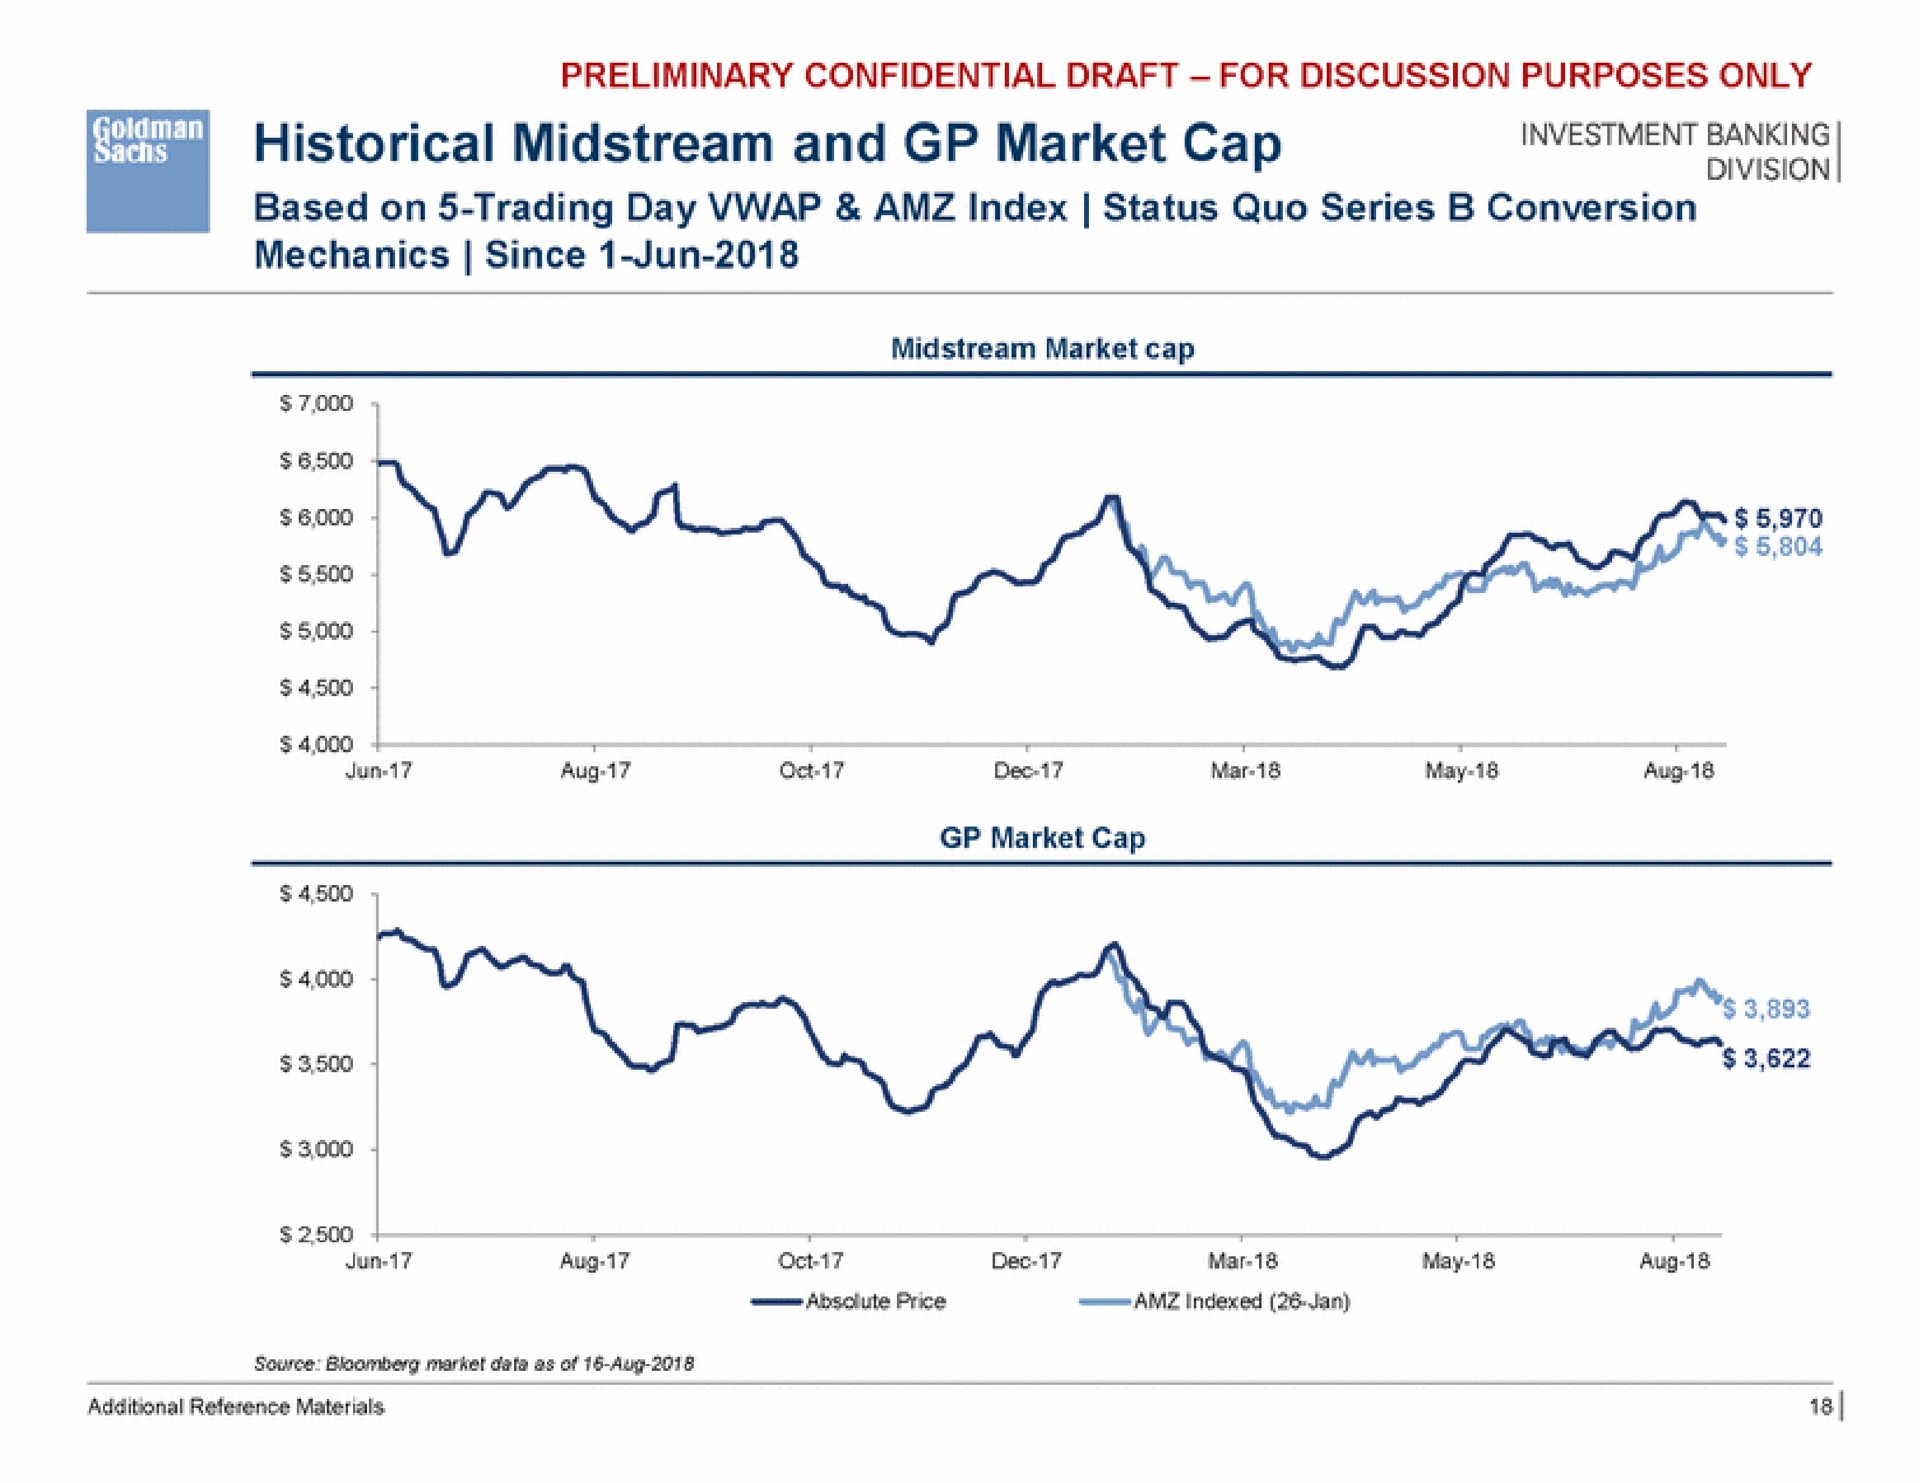 mide historical midstream and market cap | Goldman Sachs